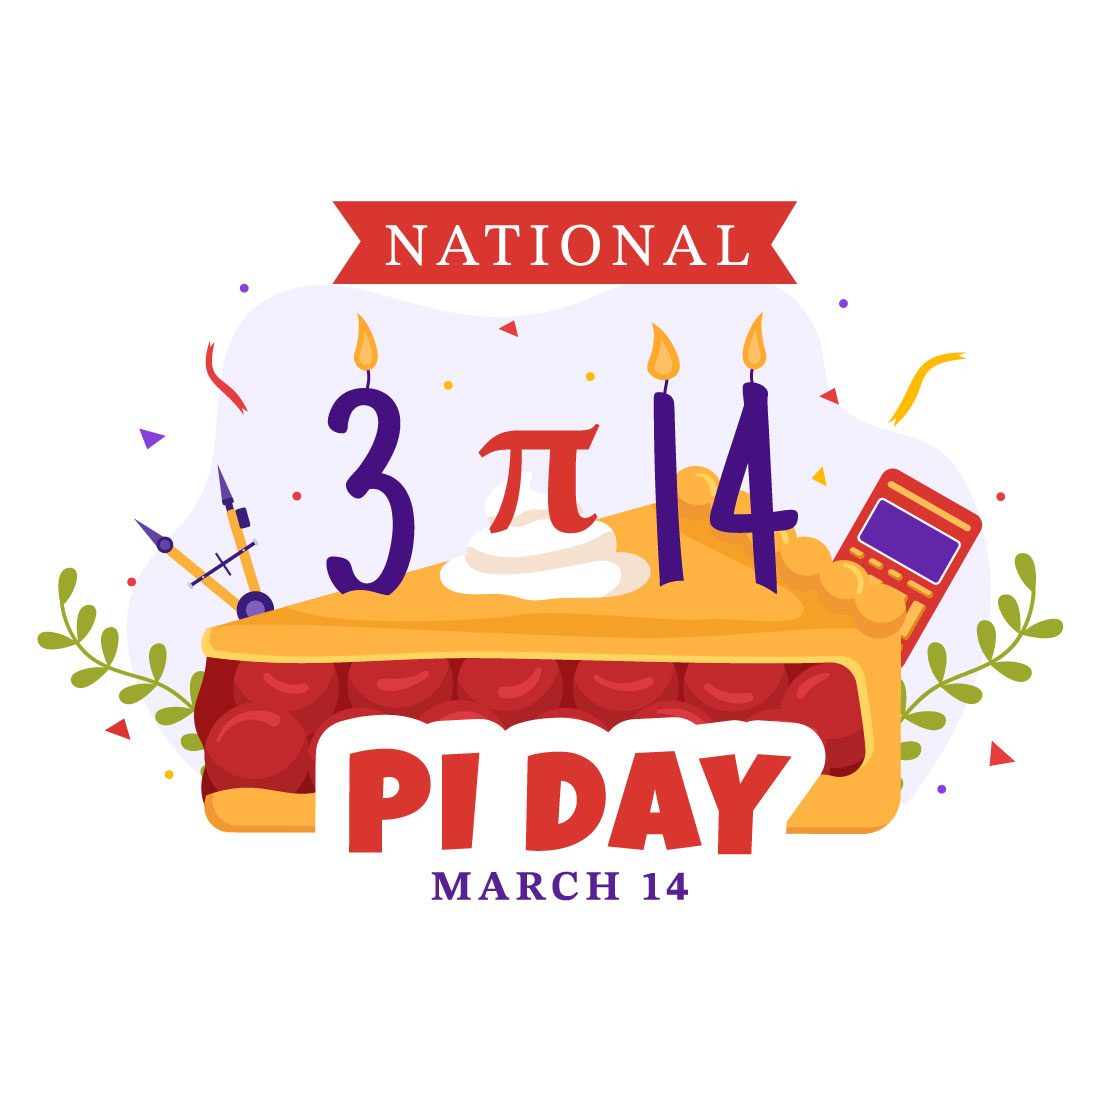 15 World Pi Day Illustration cover image.